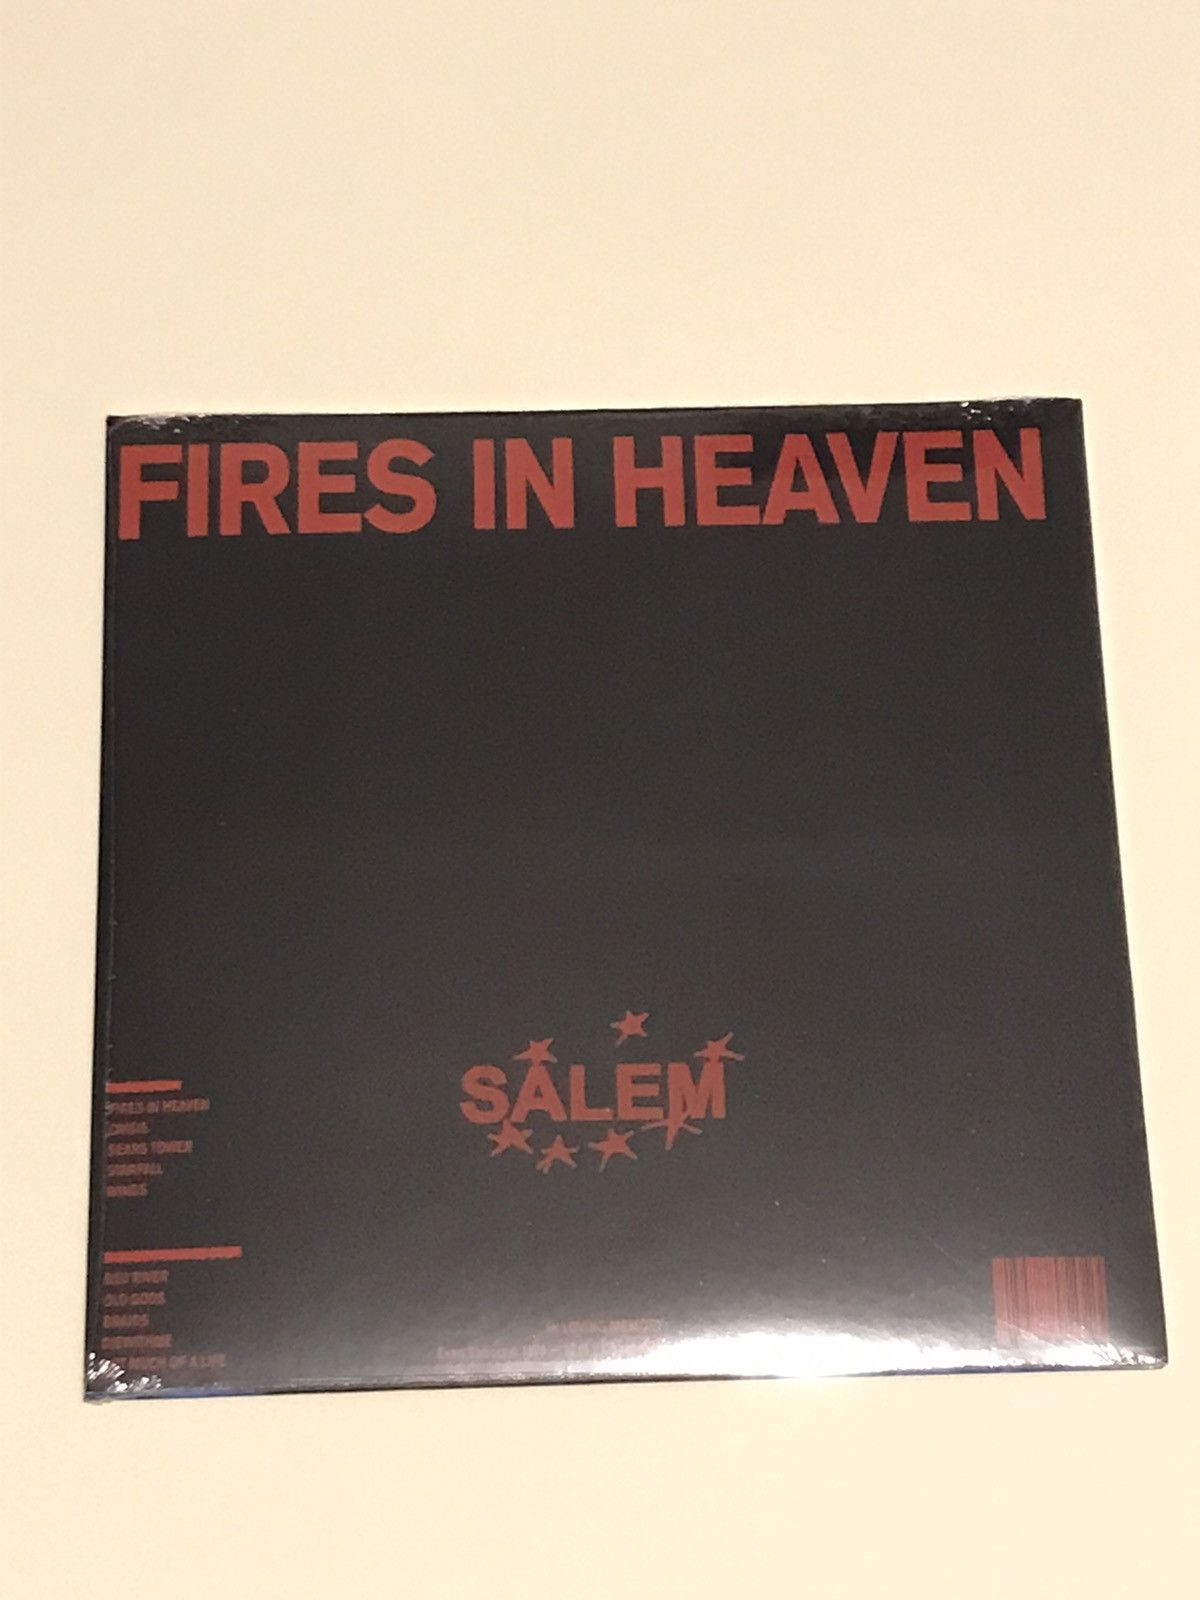 Band Tees S4LEM / SALEM 'Fires in Heaven' Exclusive Red Vinyl ...